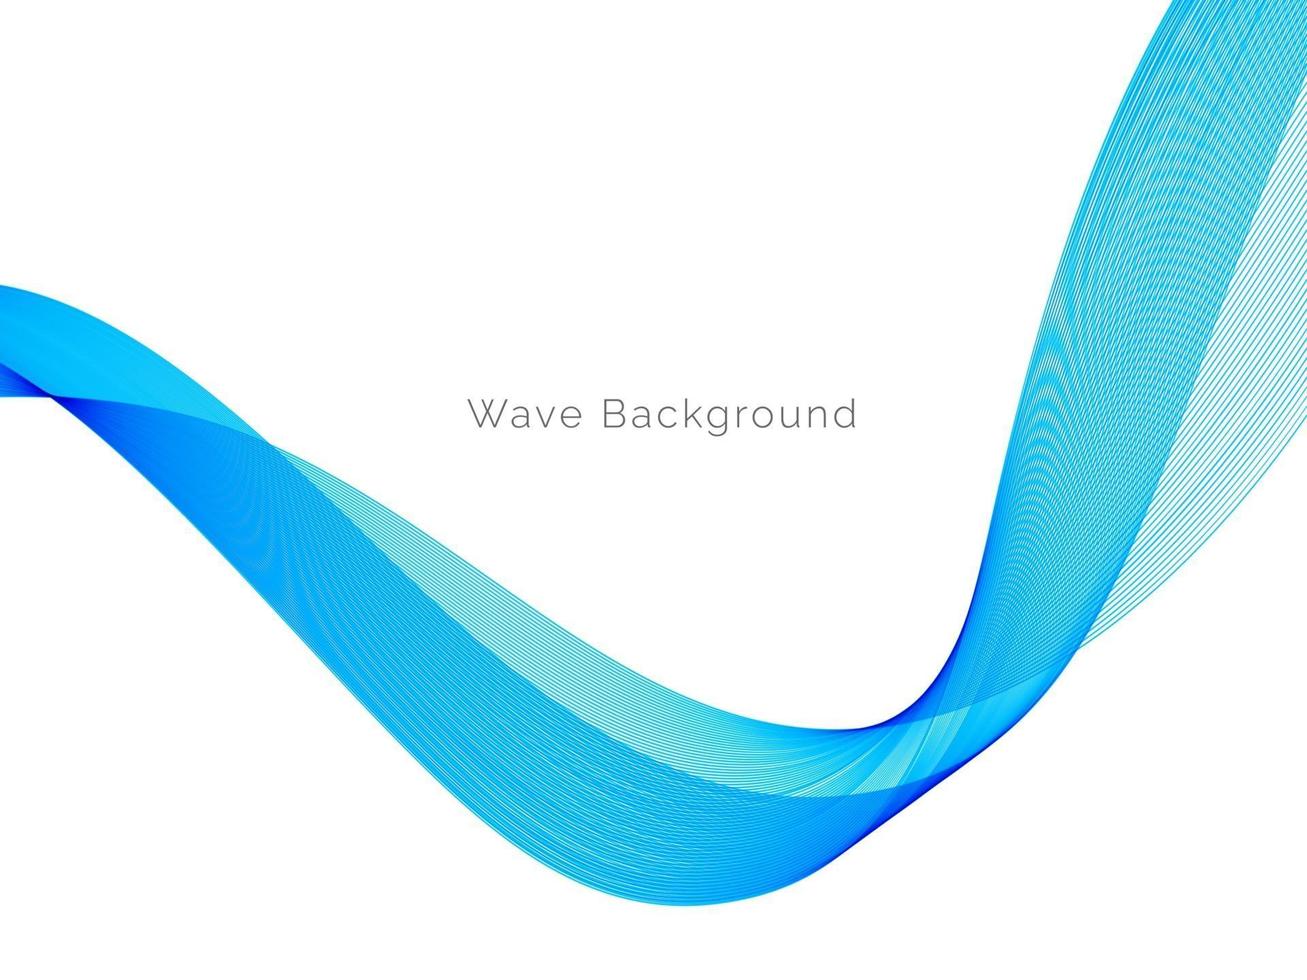 Fondo dinámico elegante de la onda azul decorativa moderna vector